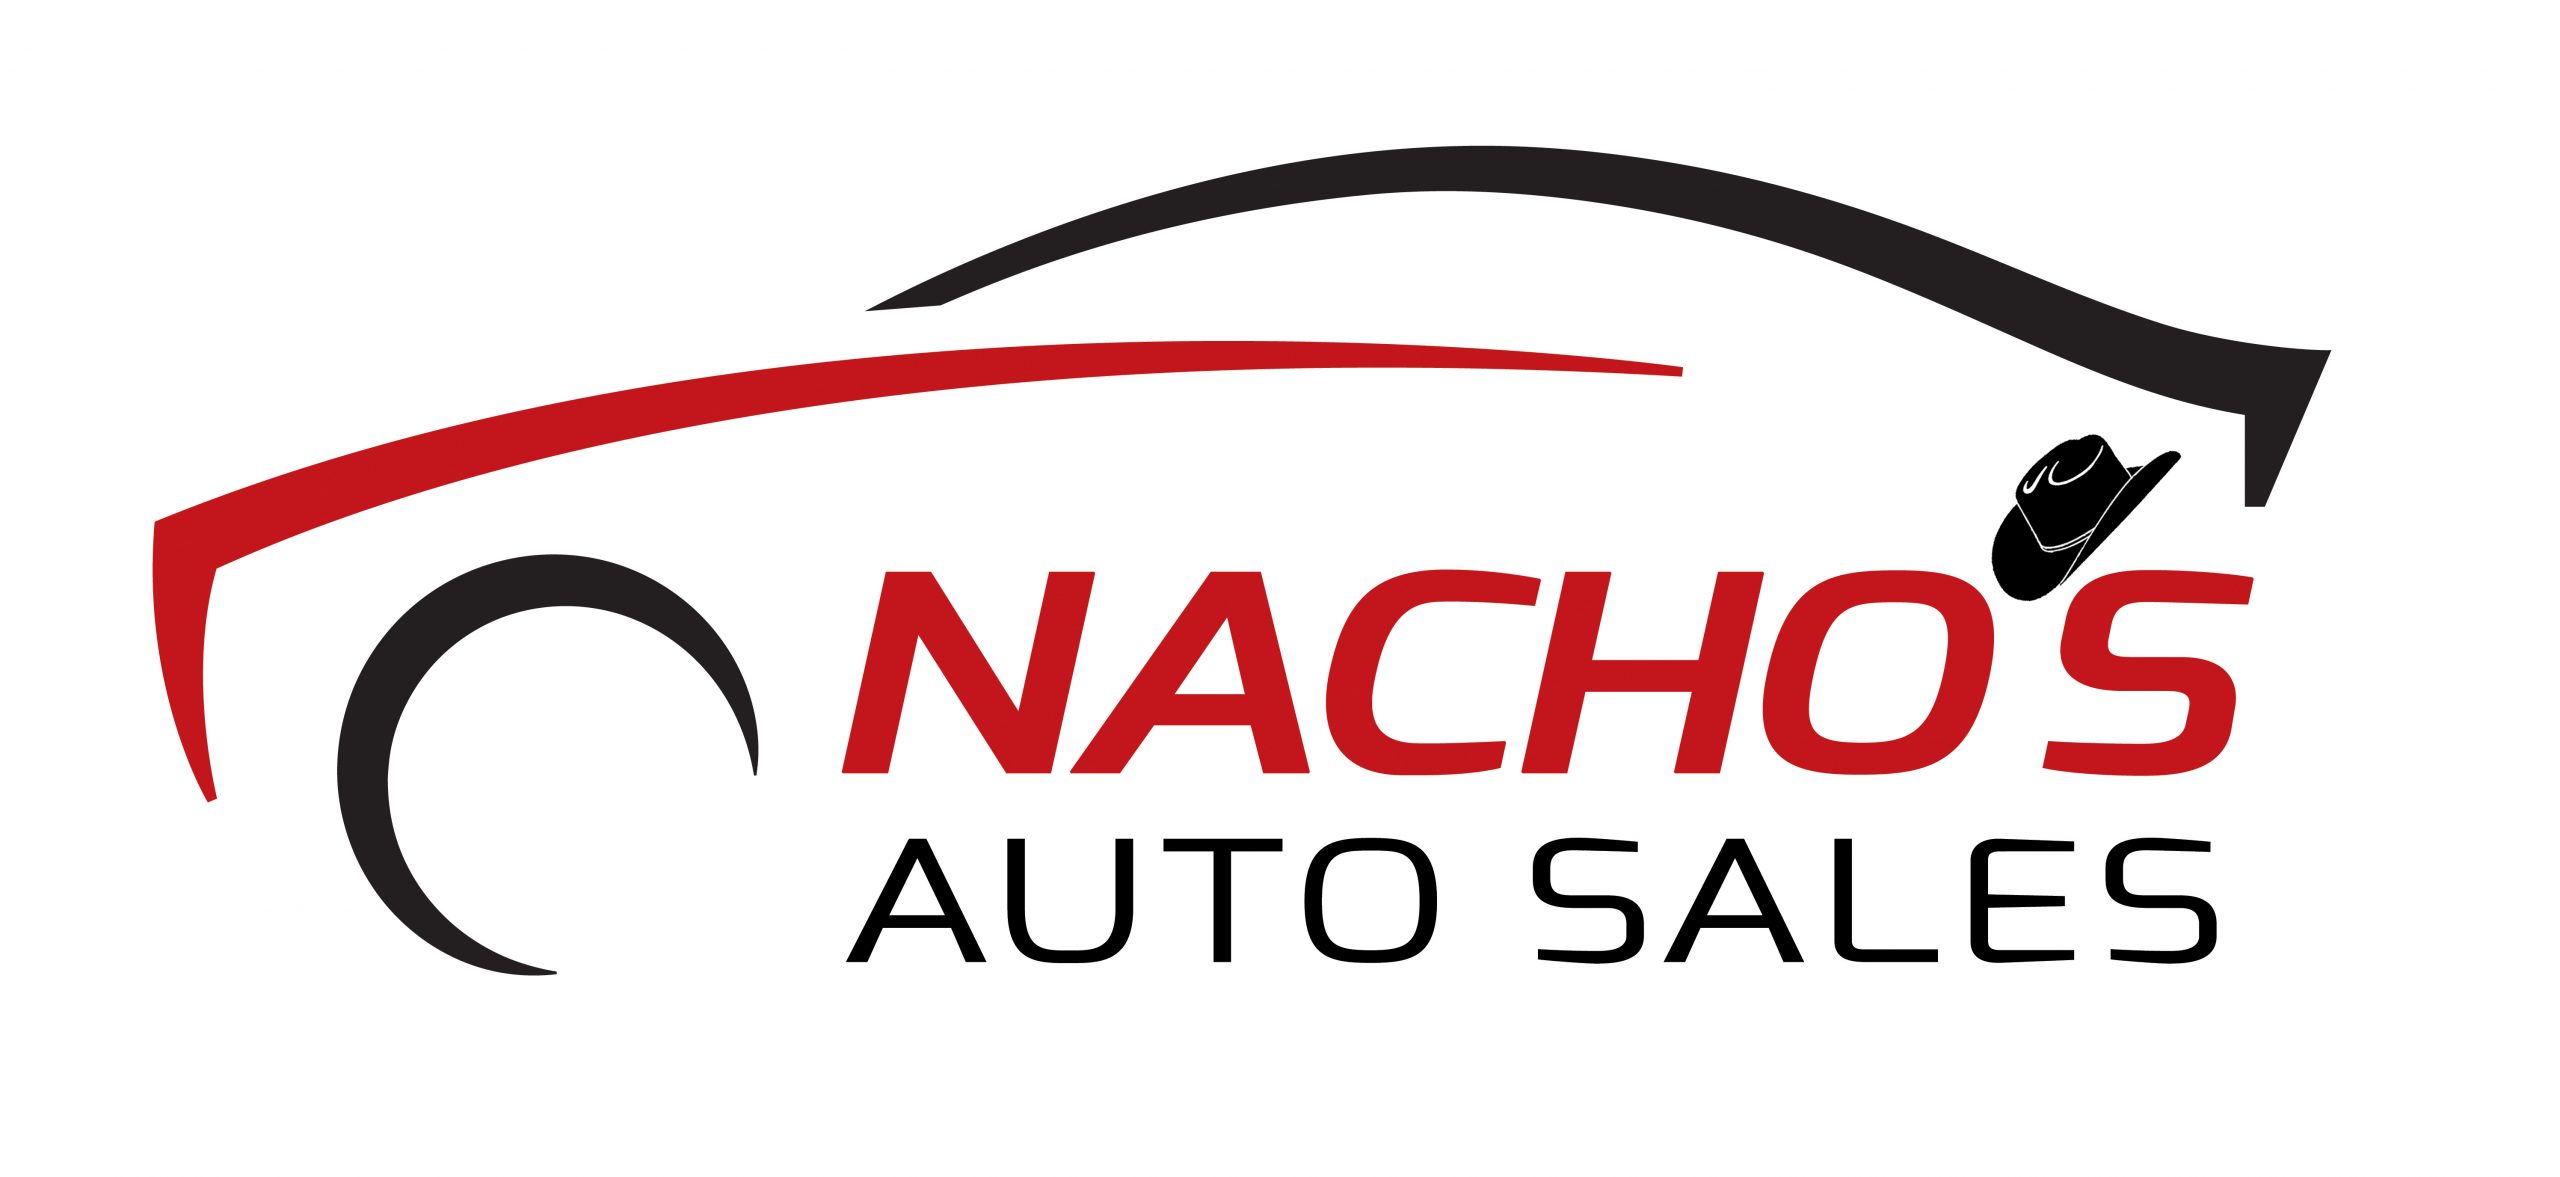 Nacho's Auto Sales